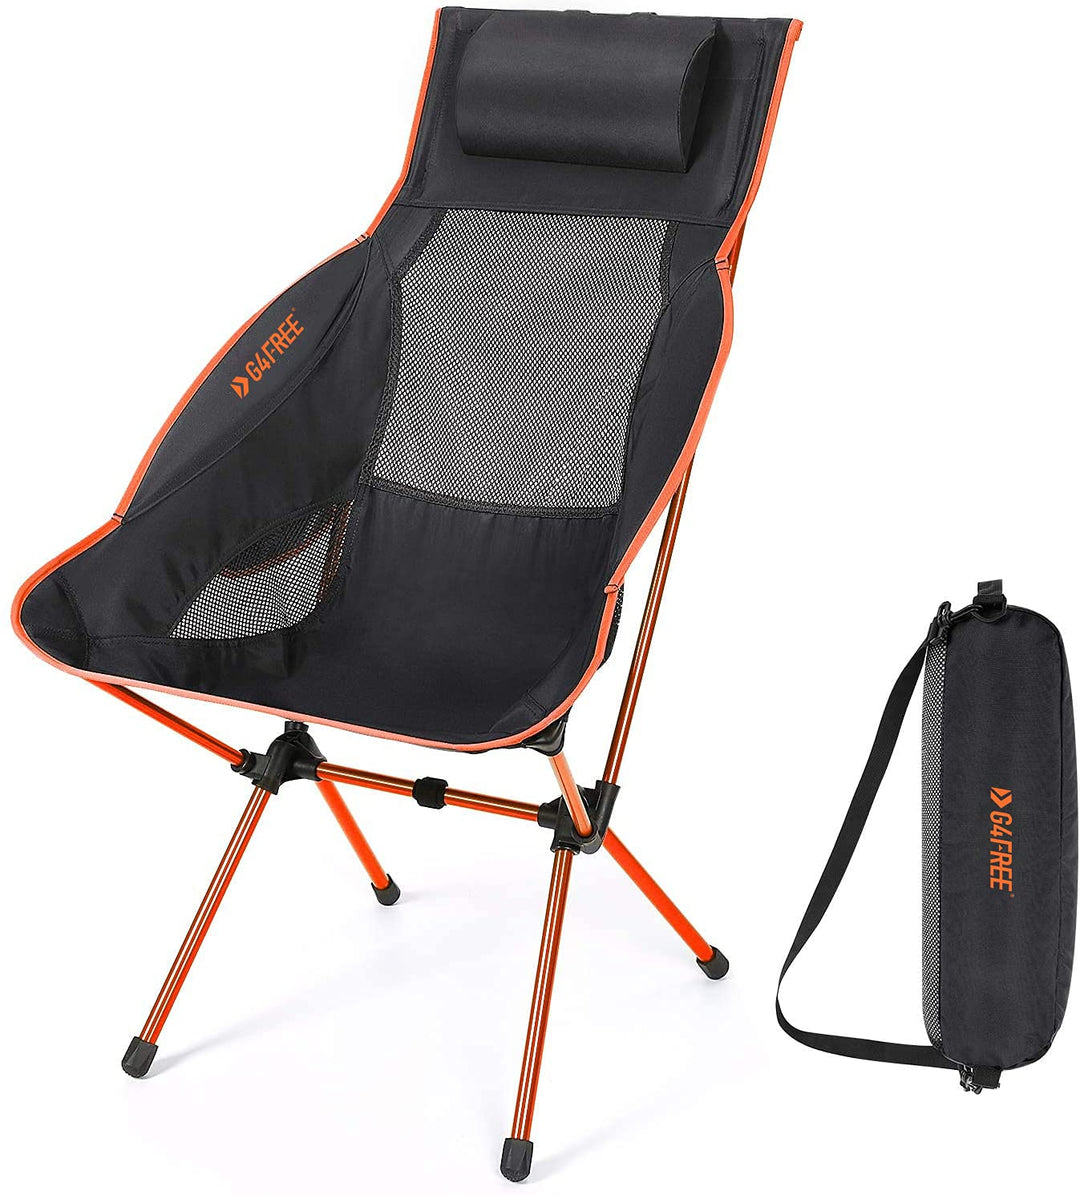 Folding Camping Chair, High Back, Lightweight